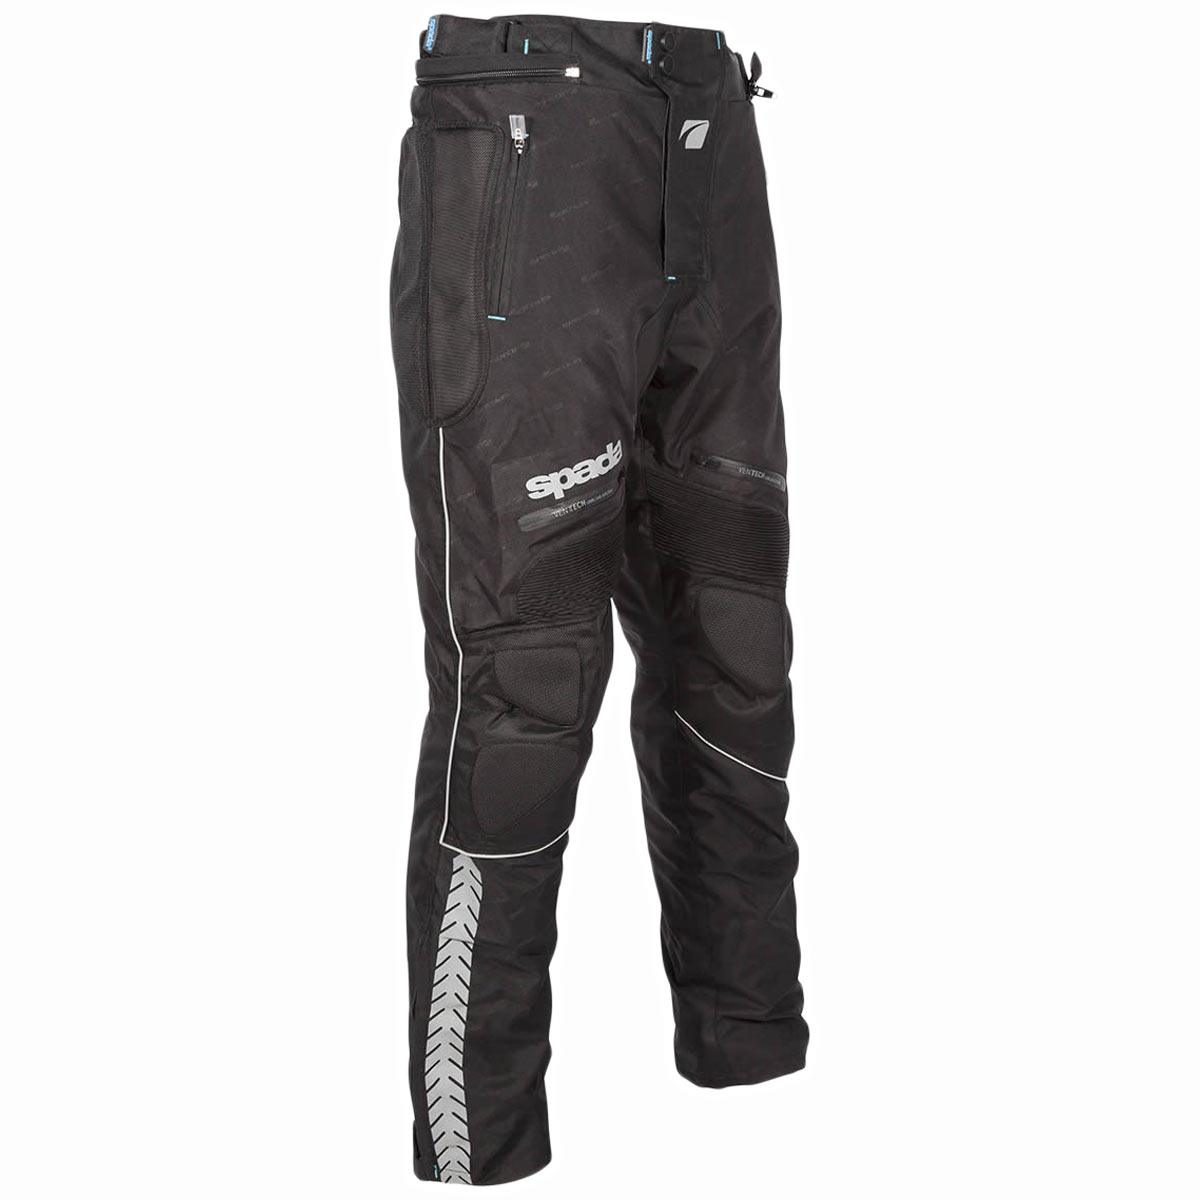 Spada Metro Trousers Short Leg Ladies WP Black - Motorcycle Trousers